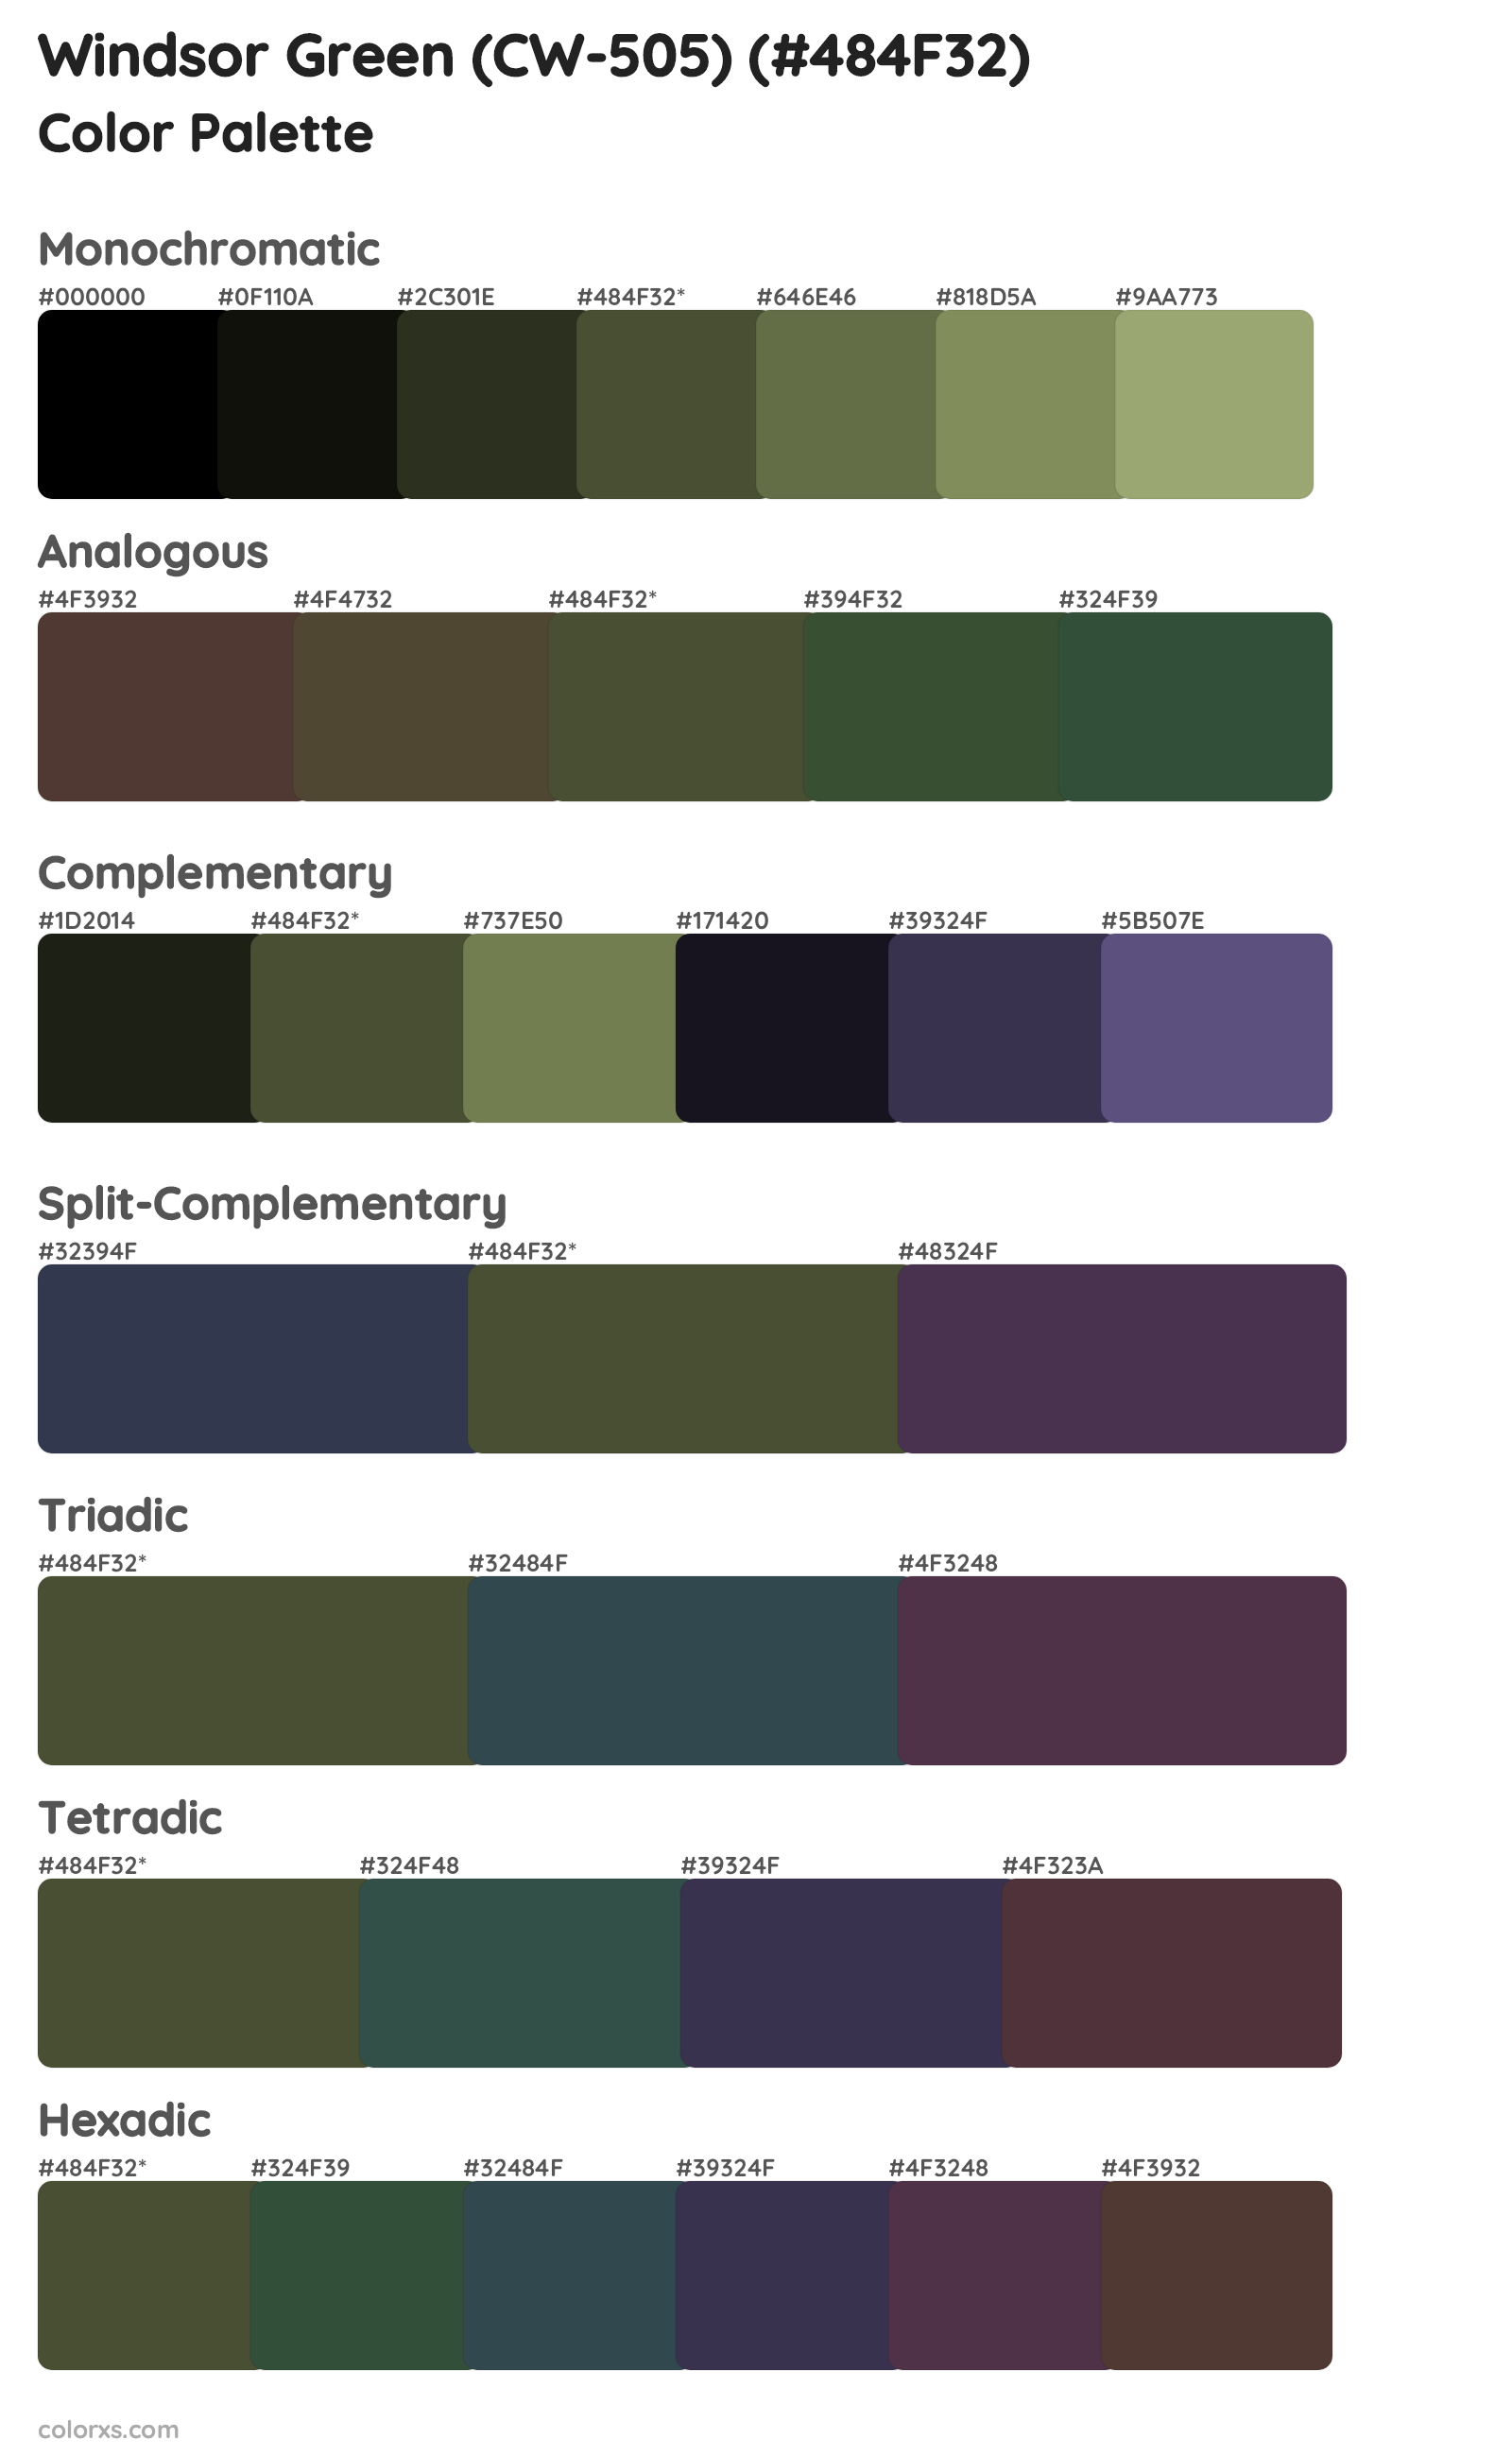 Windsor Green (CW-505) Color Scheme Palettes